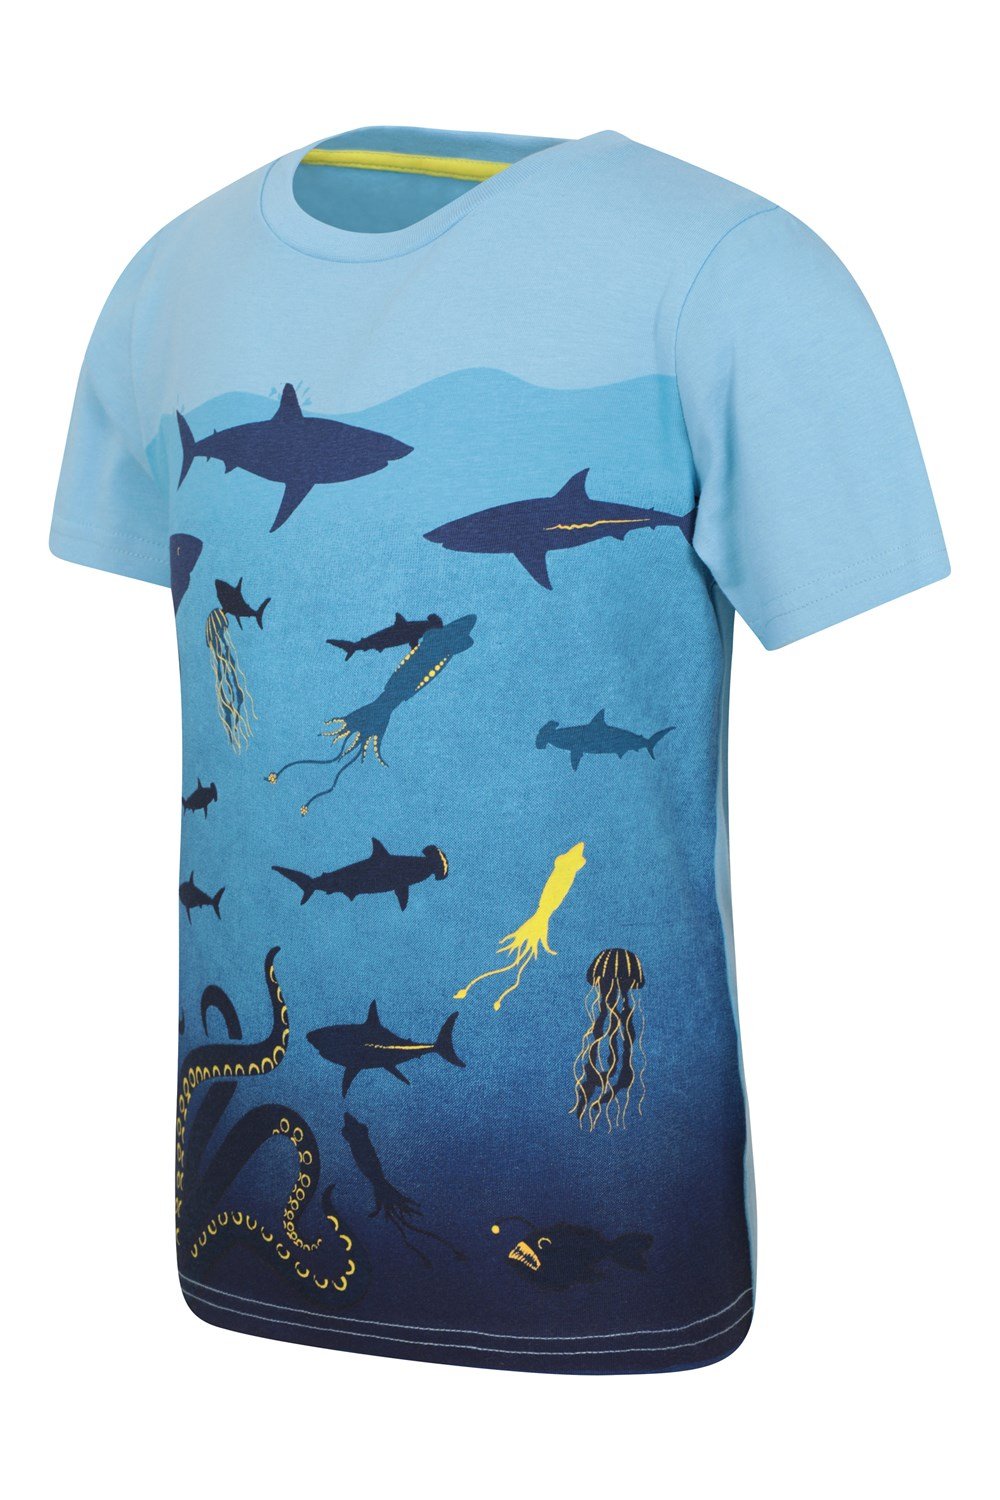 Mountain Warehouse Boys Organic T-Shirt Kids Ombre Deep Sea Top Short ...